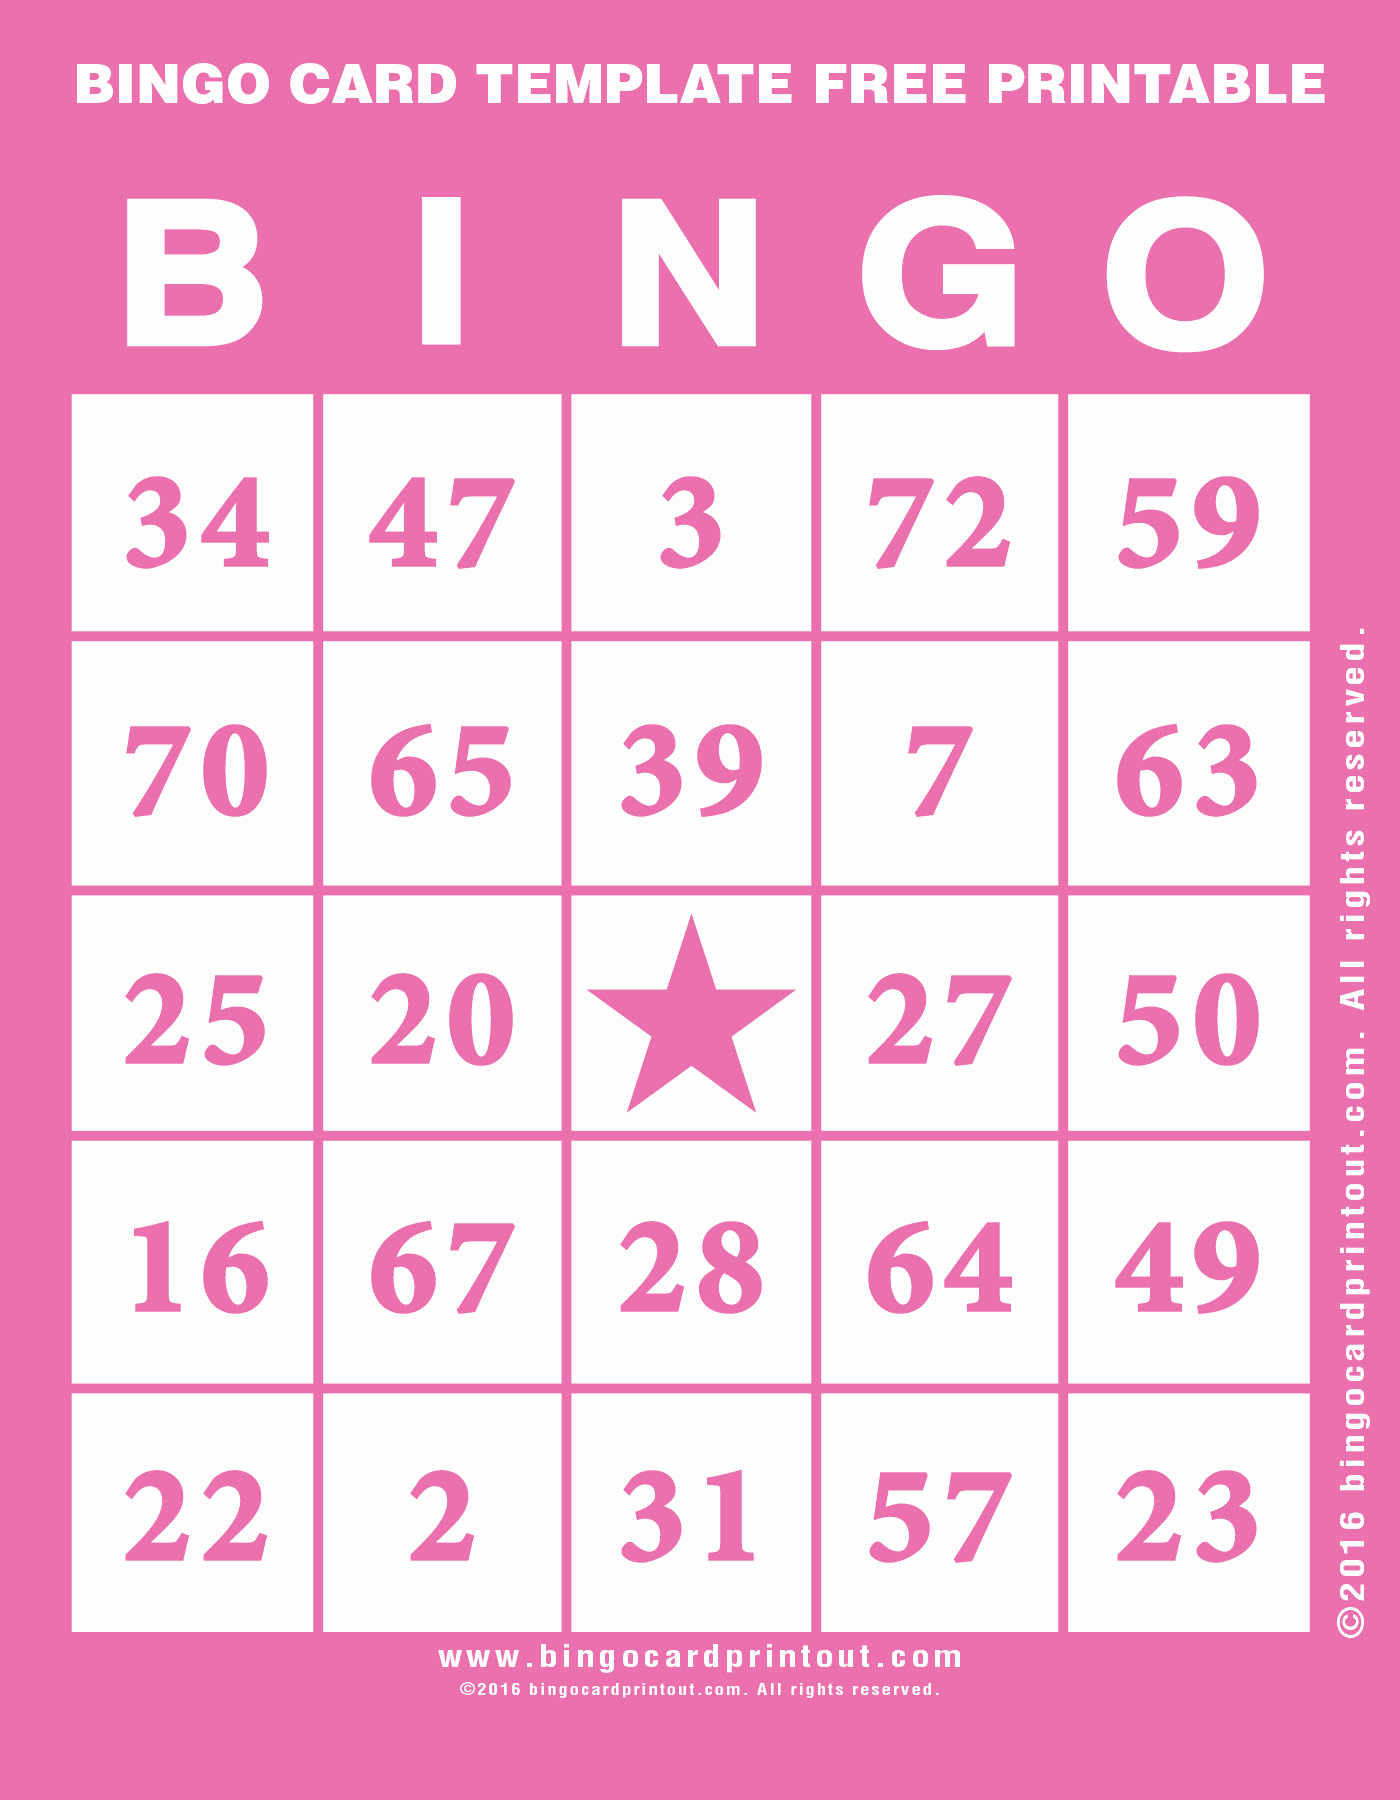 Free Printable Photo Cards Templates Elegant Bingo Card Template Free Printable Bingocardprintout